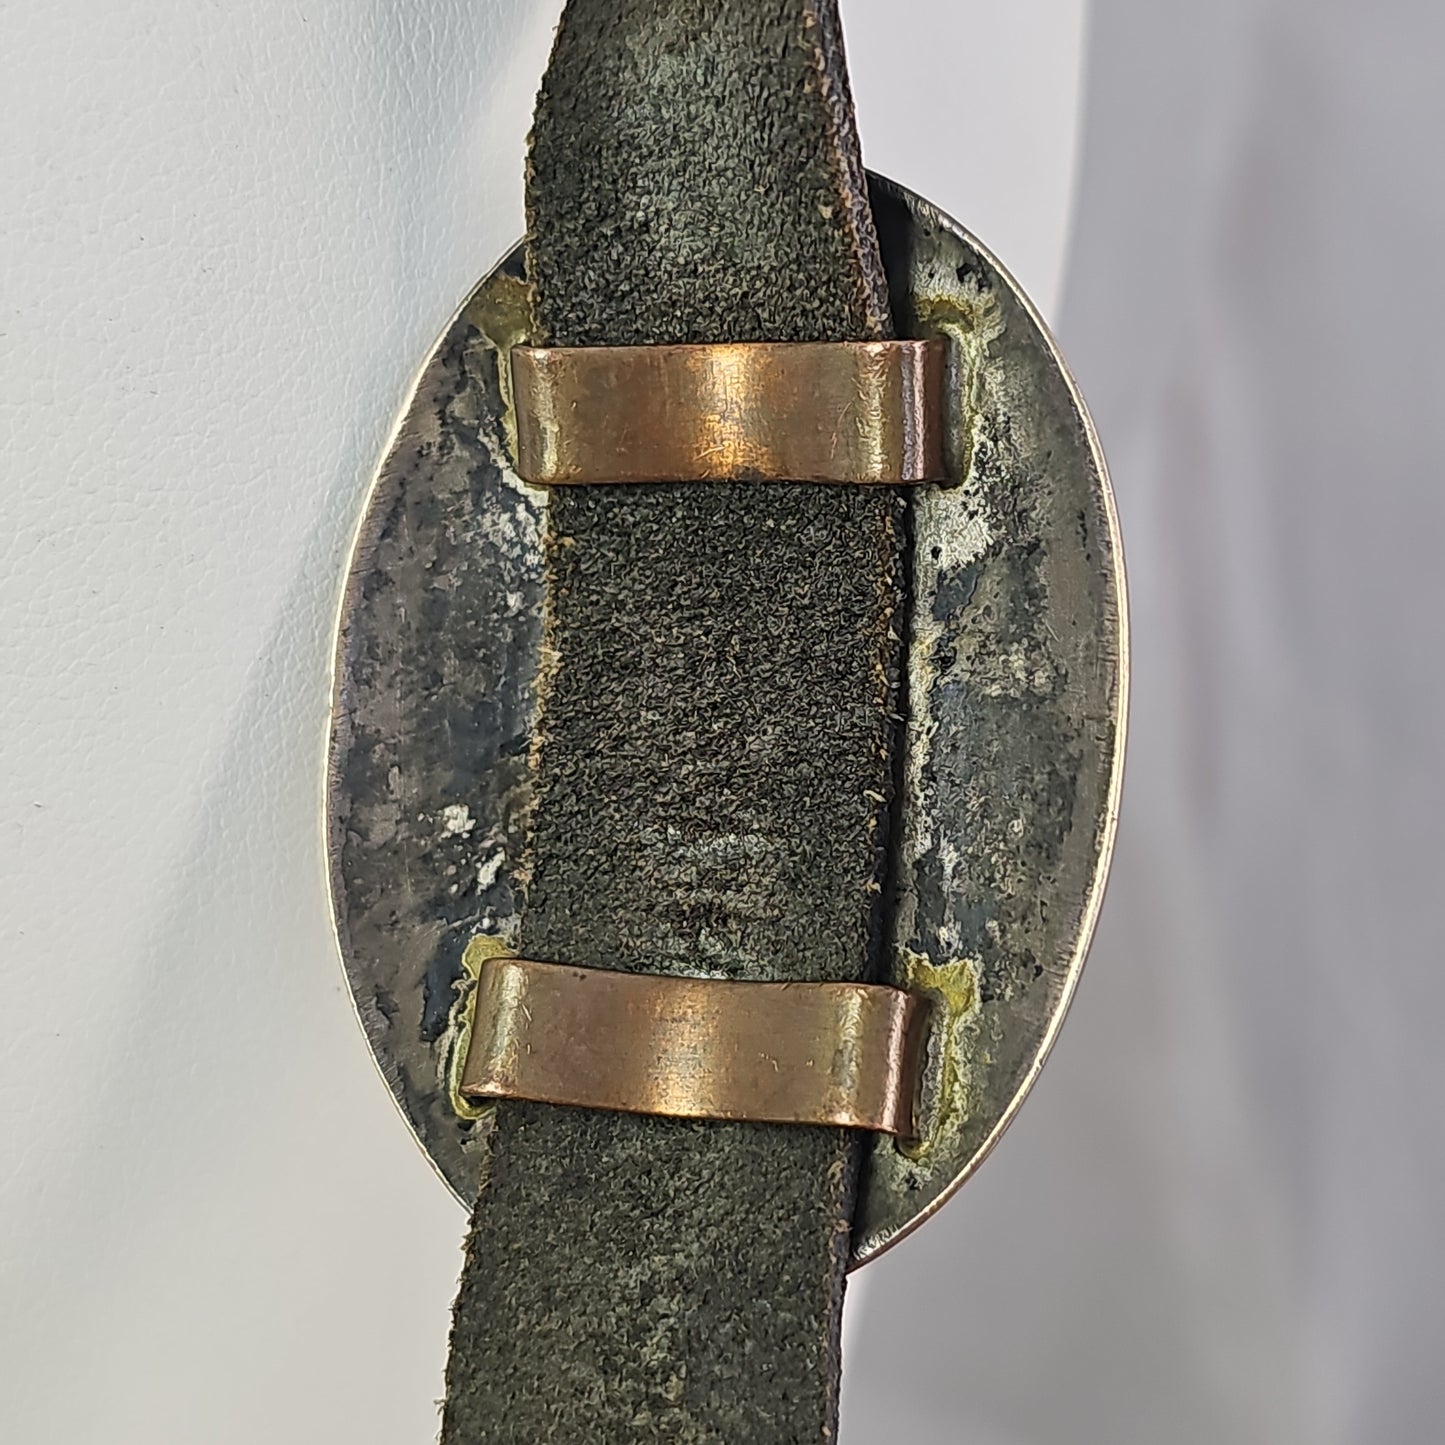 Rug pattern concho belt